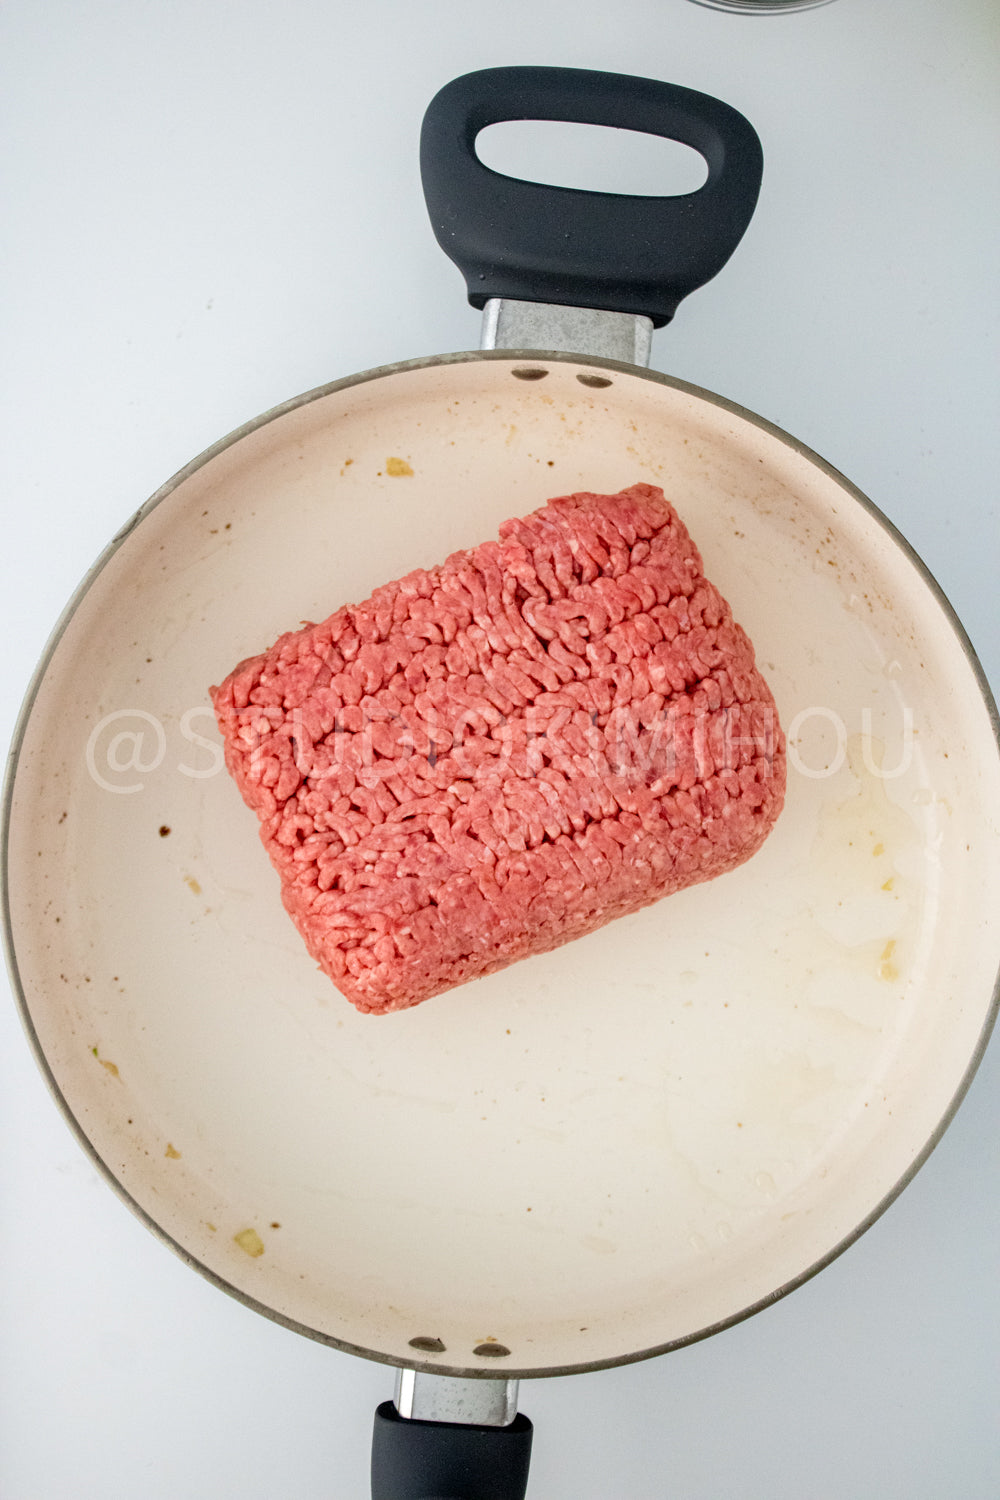 PLR - Bacon Cheeseburger Egg Rolls